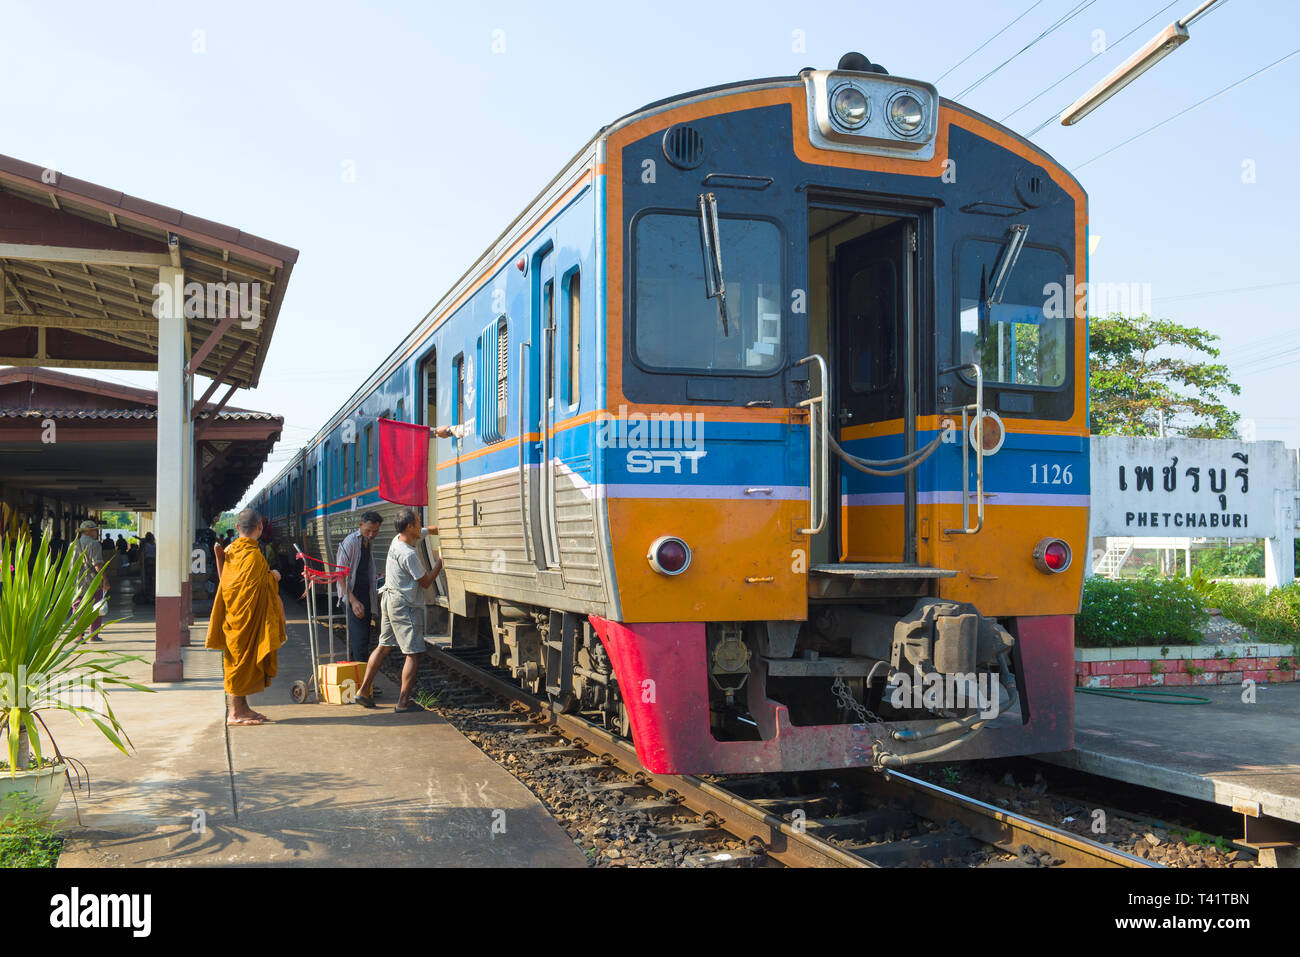 PHETCHABURI, THAILAND - DECEMBER 13, 2018: Boarding a passenger train on the station of Phetchaburi Stock Photo